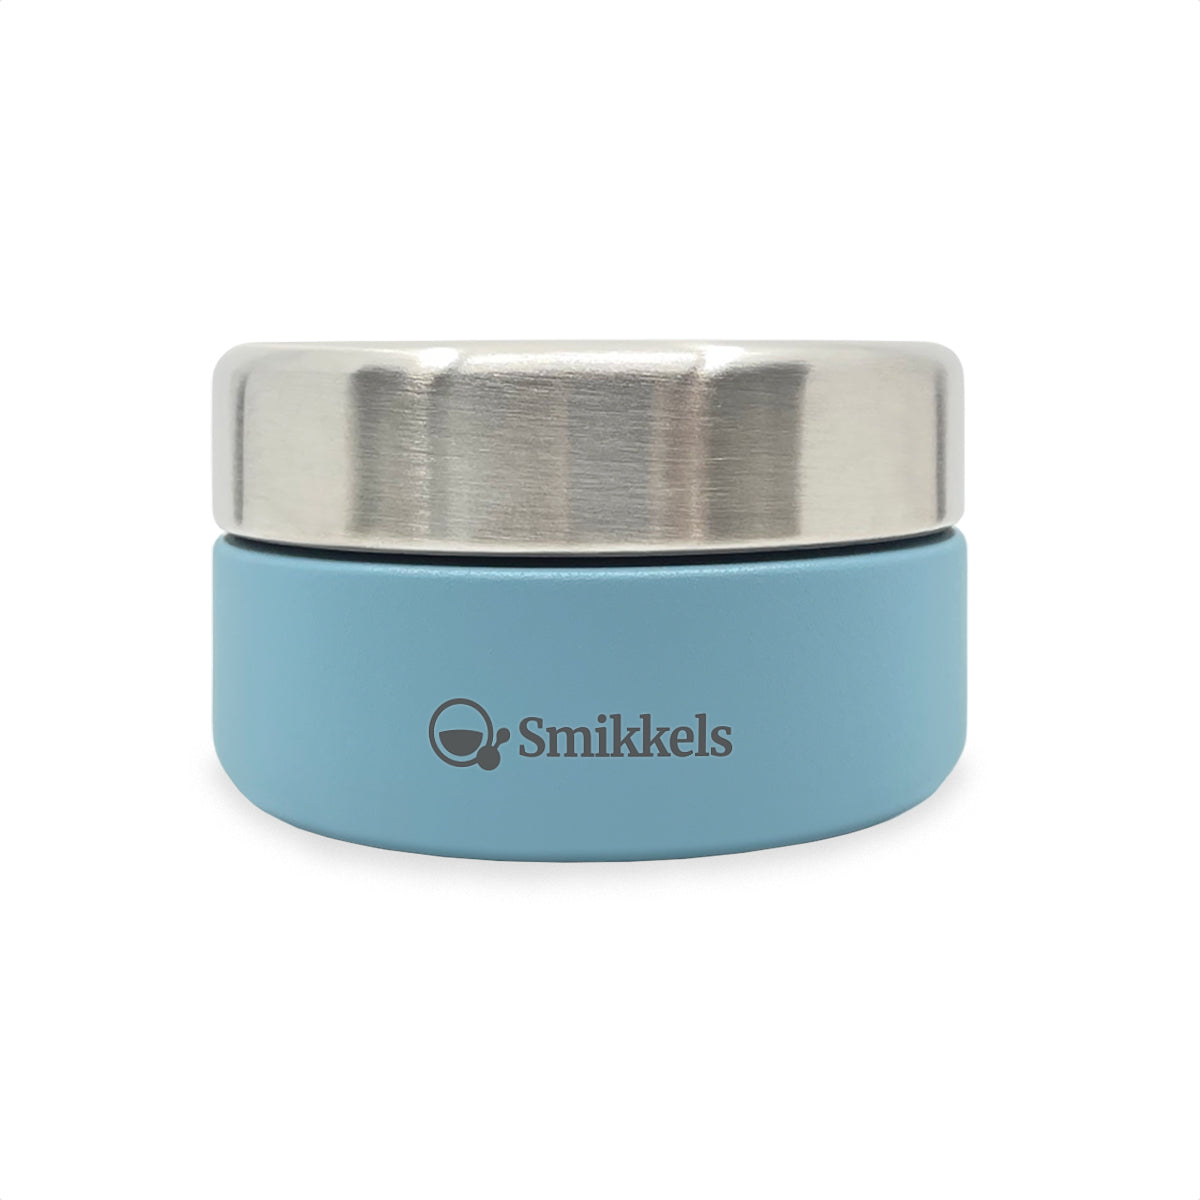 Smikkels - RVS fruit box 280 ml - blue